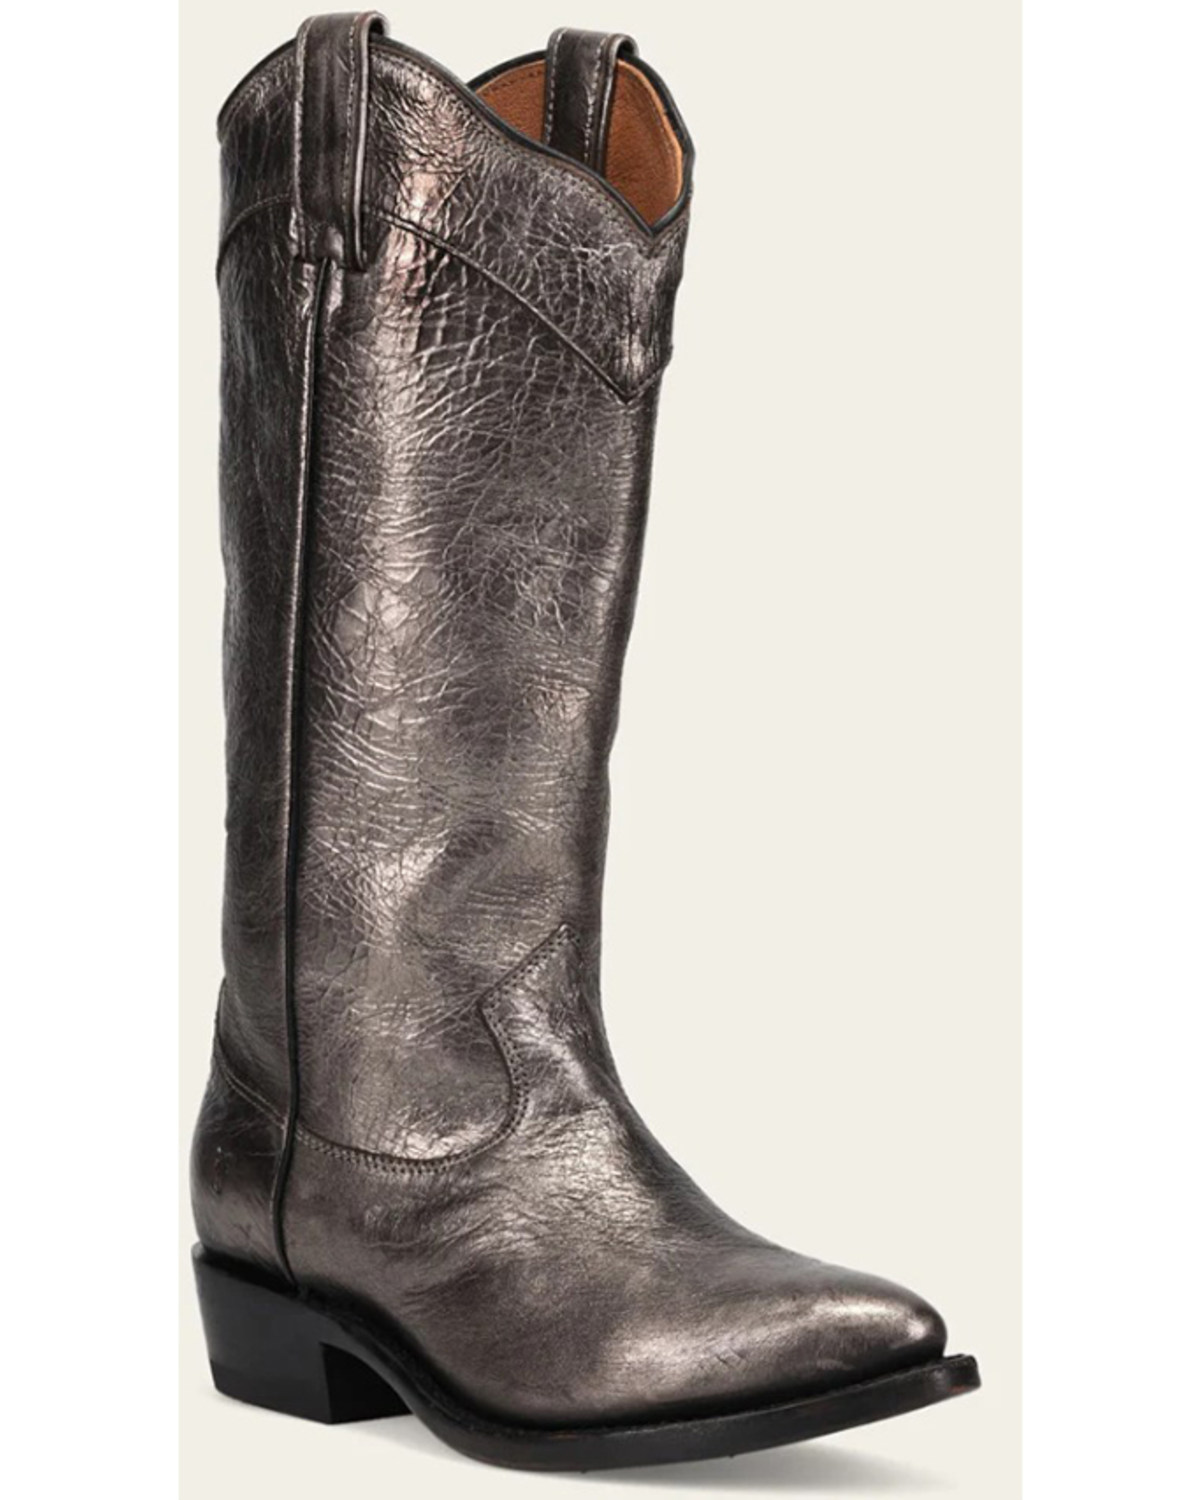 Frye Women's Billy Daisy Pull-On Western Boots - Medium Toe